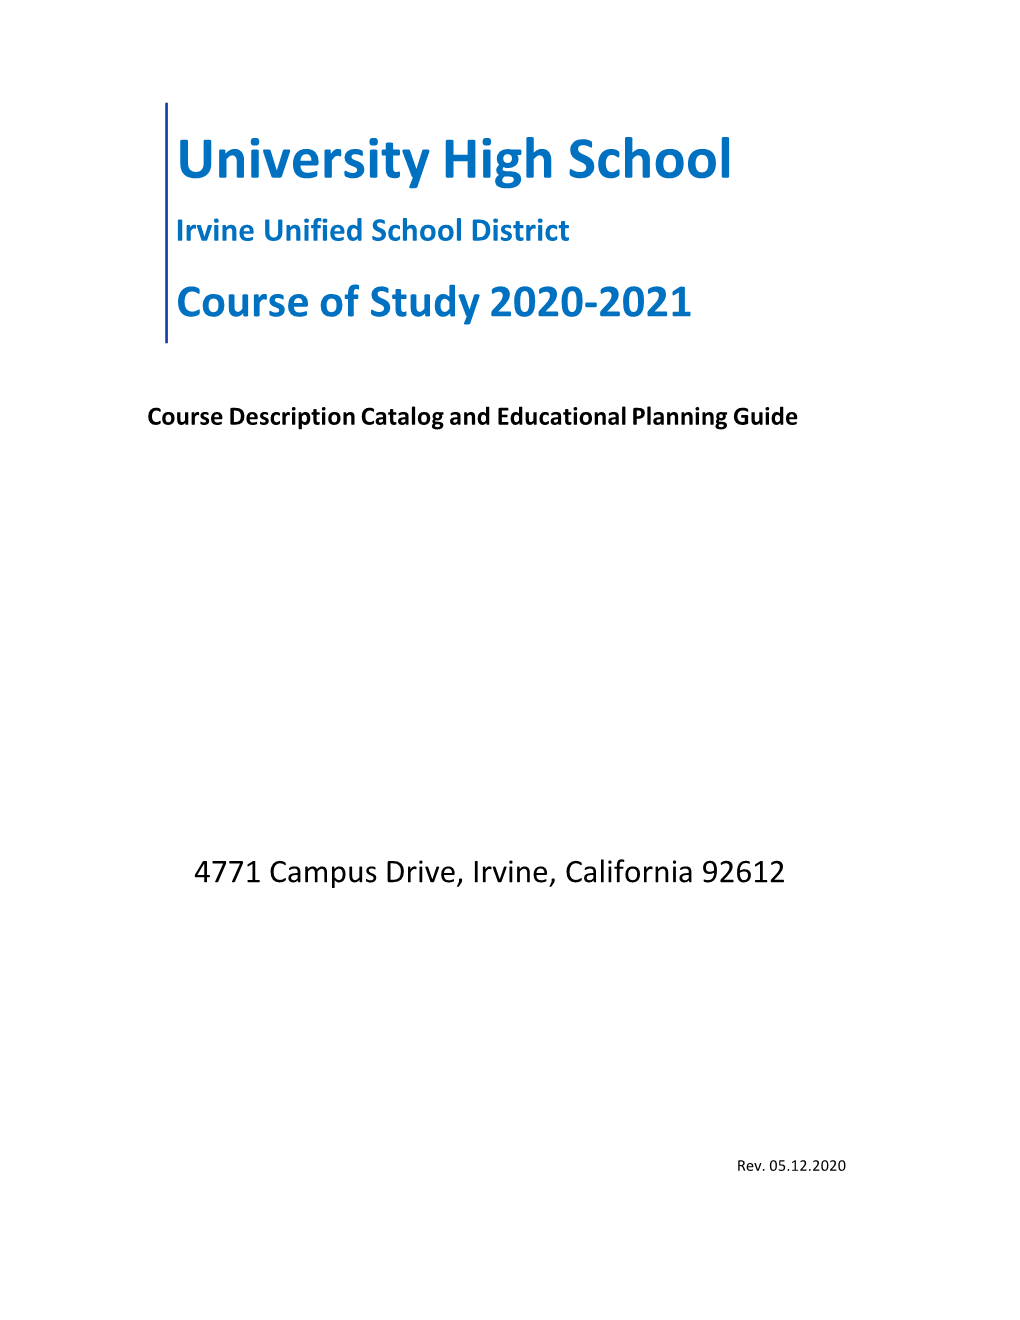 UHS Course Catalog 2020-2021